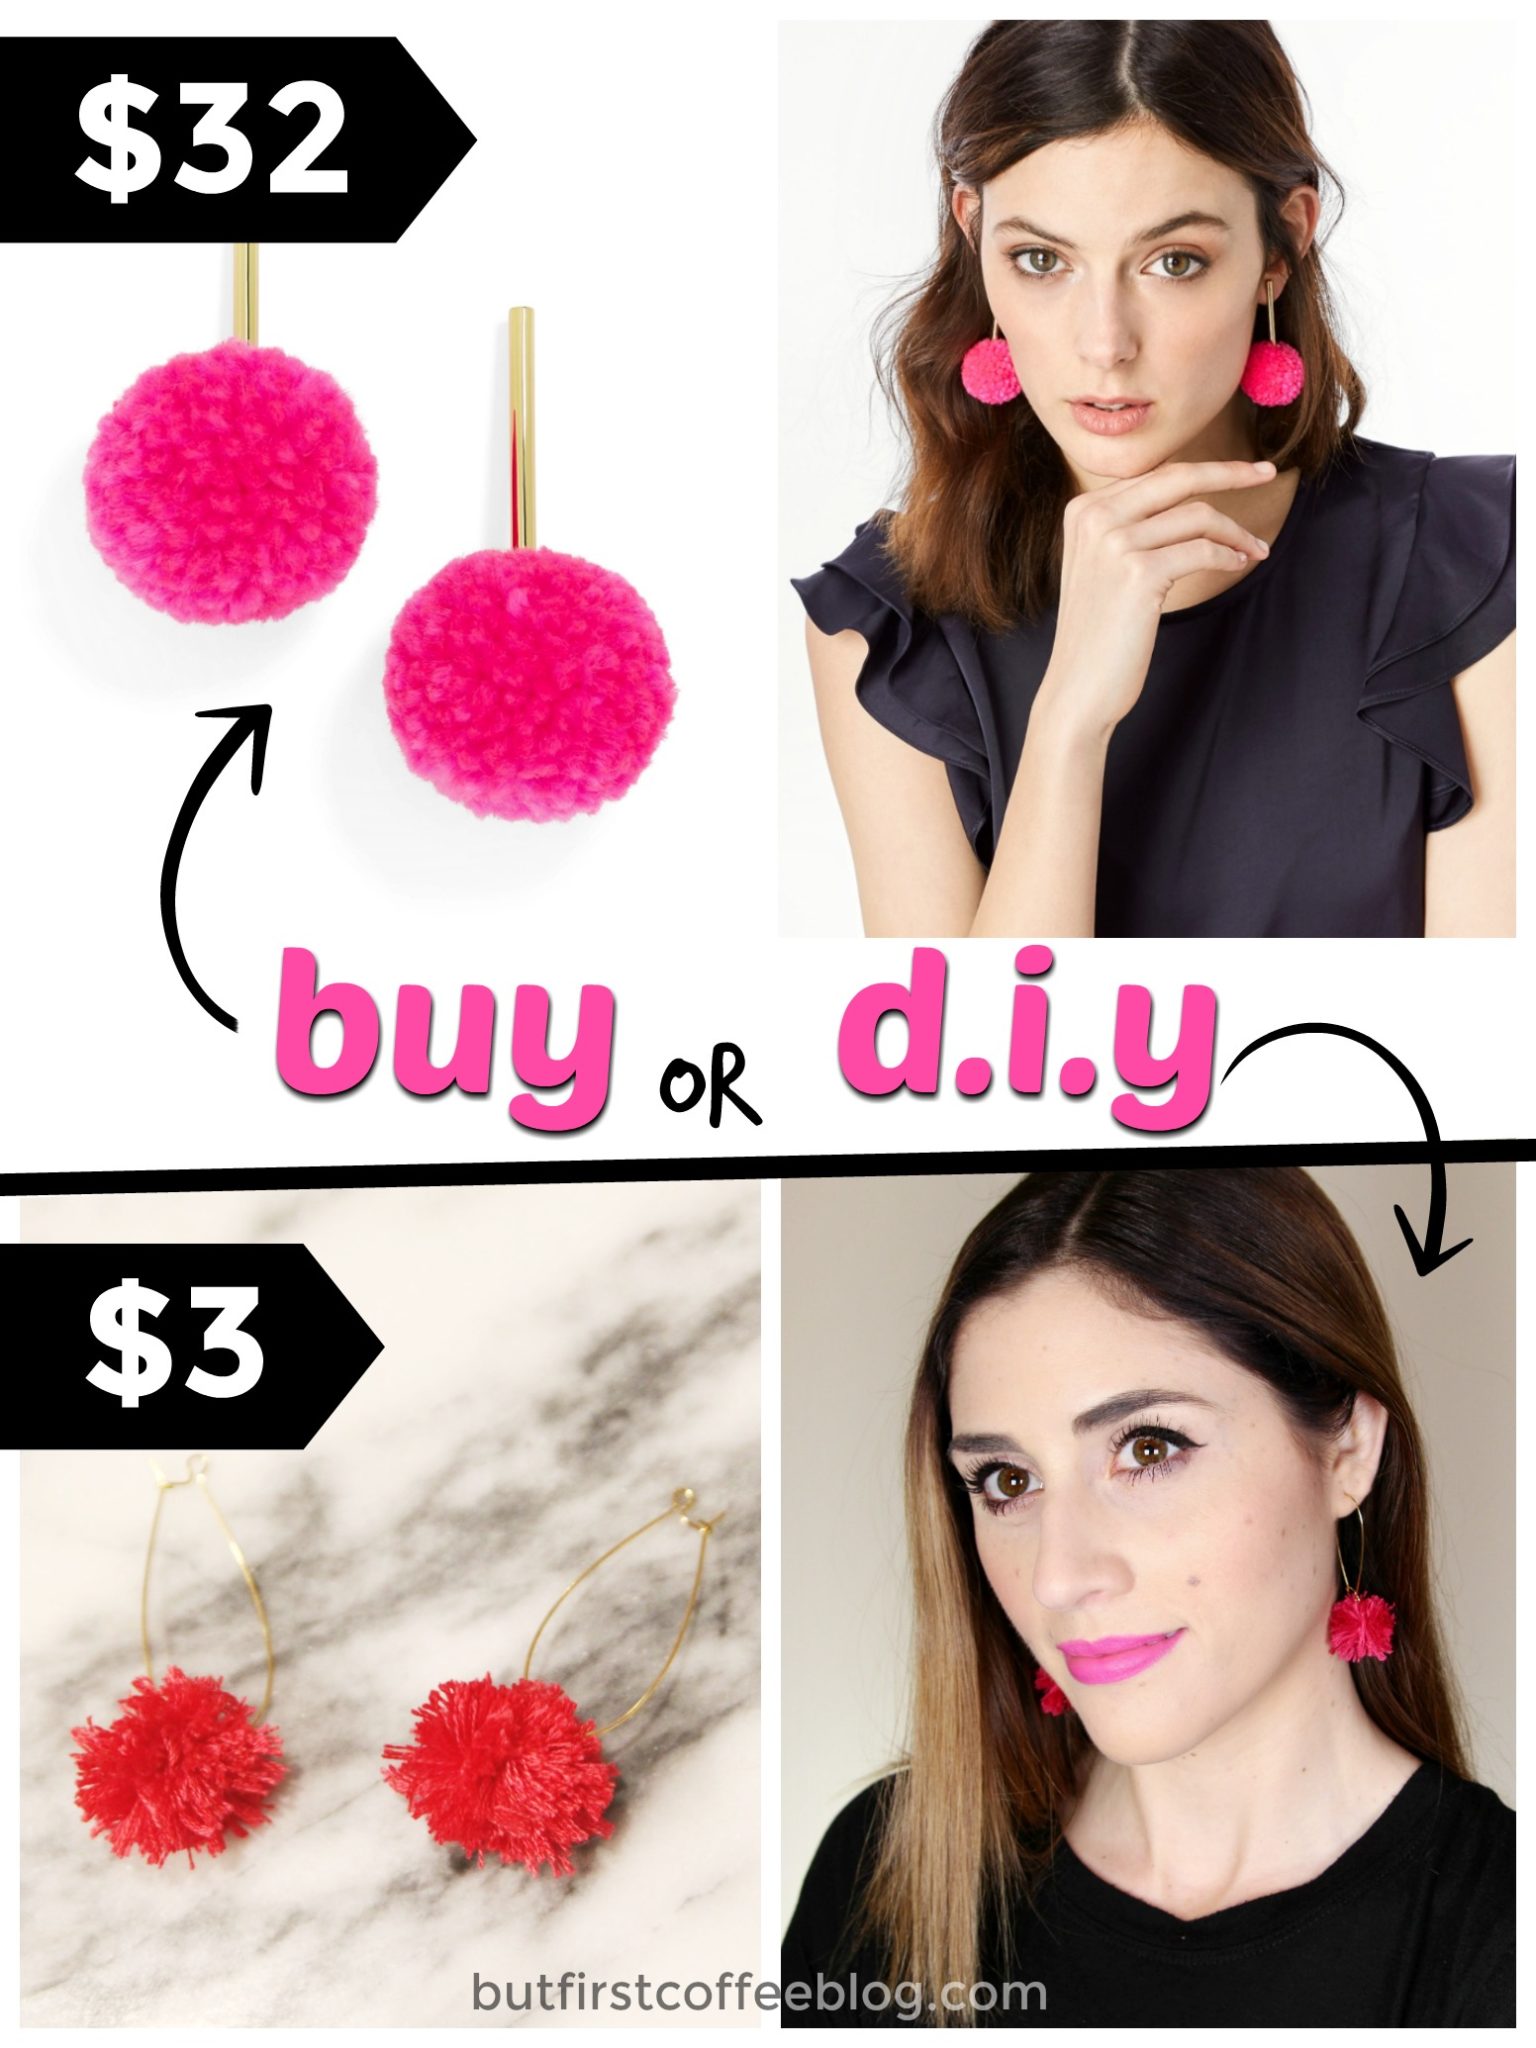 DIY Pom Pom Earrings | How to Make fun pompom earrings